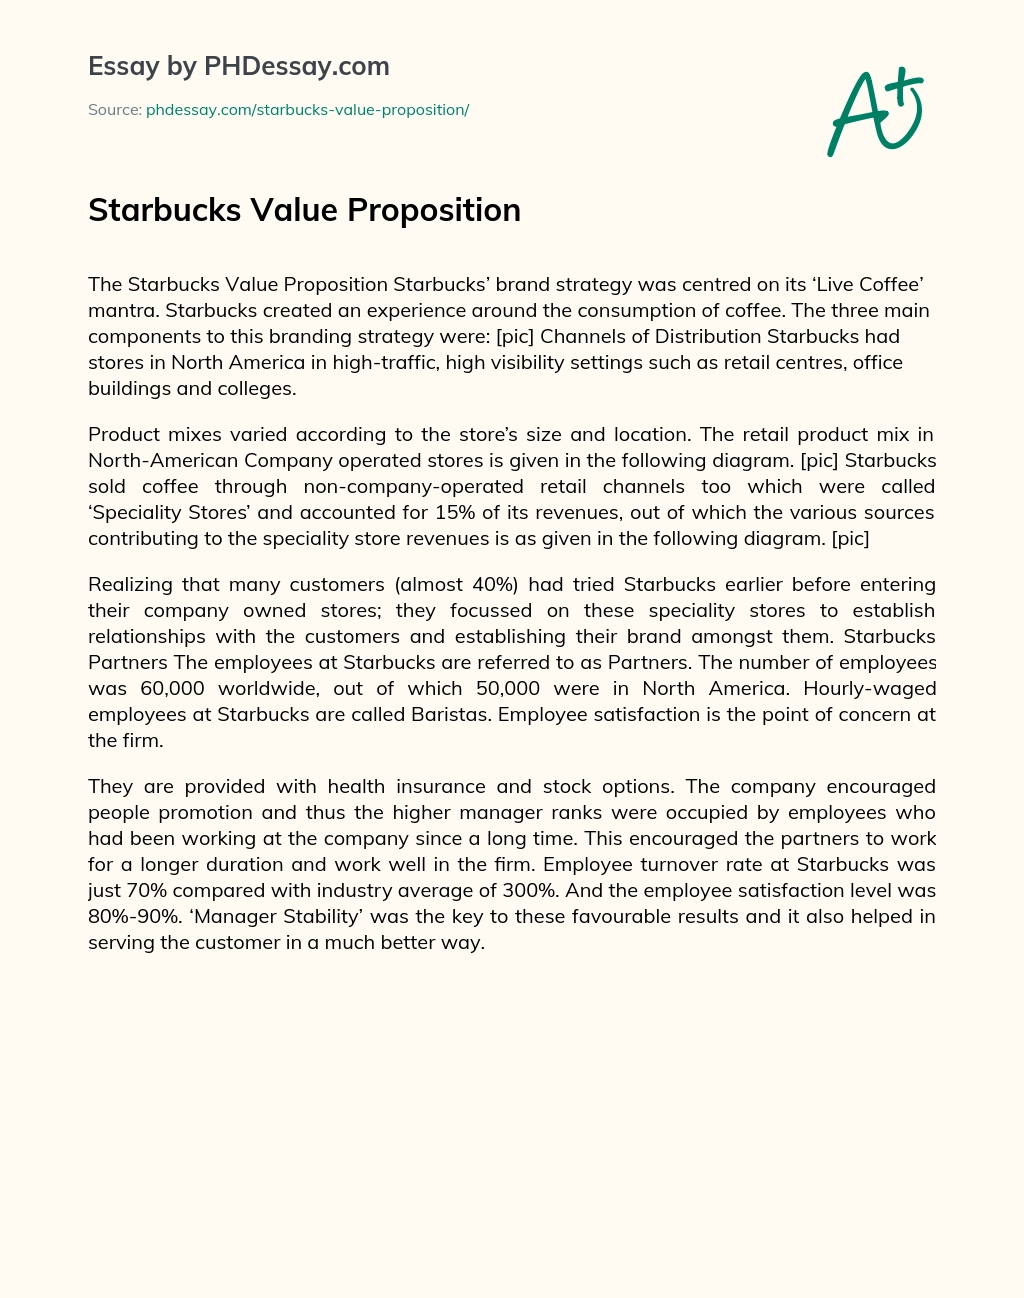 Starbucks Value Proposition essay